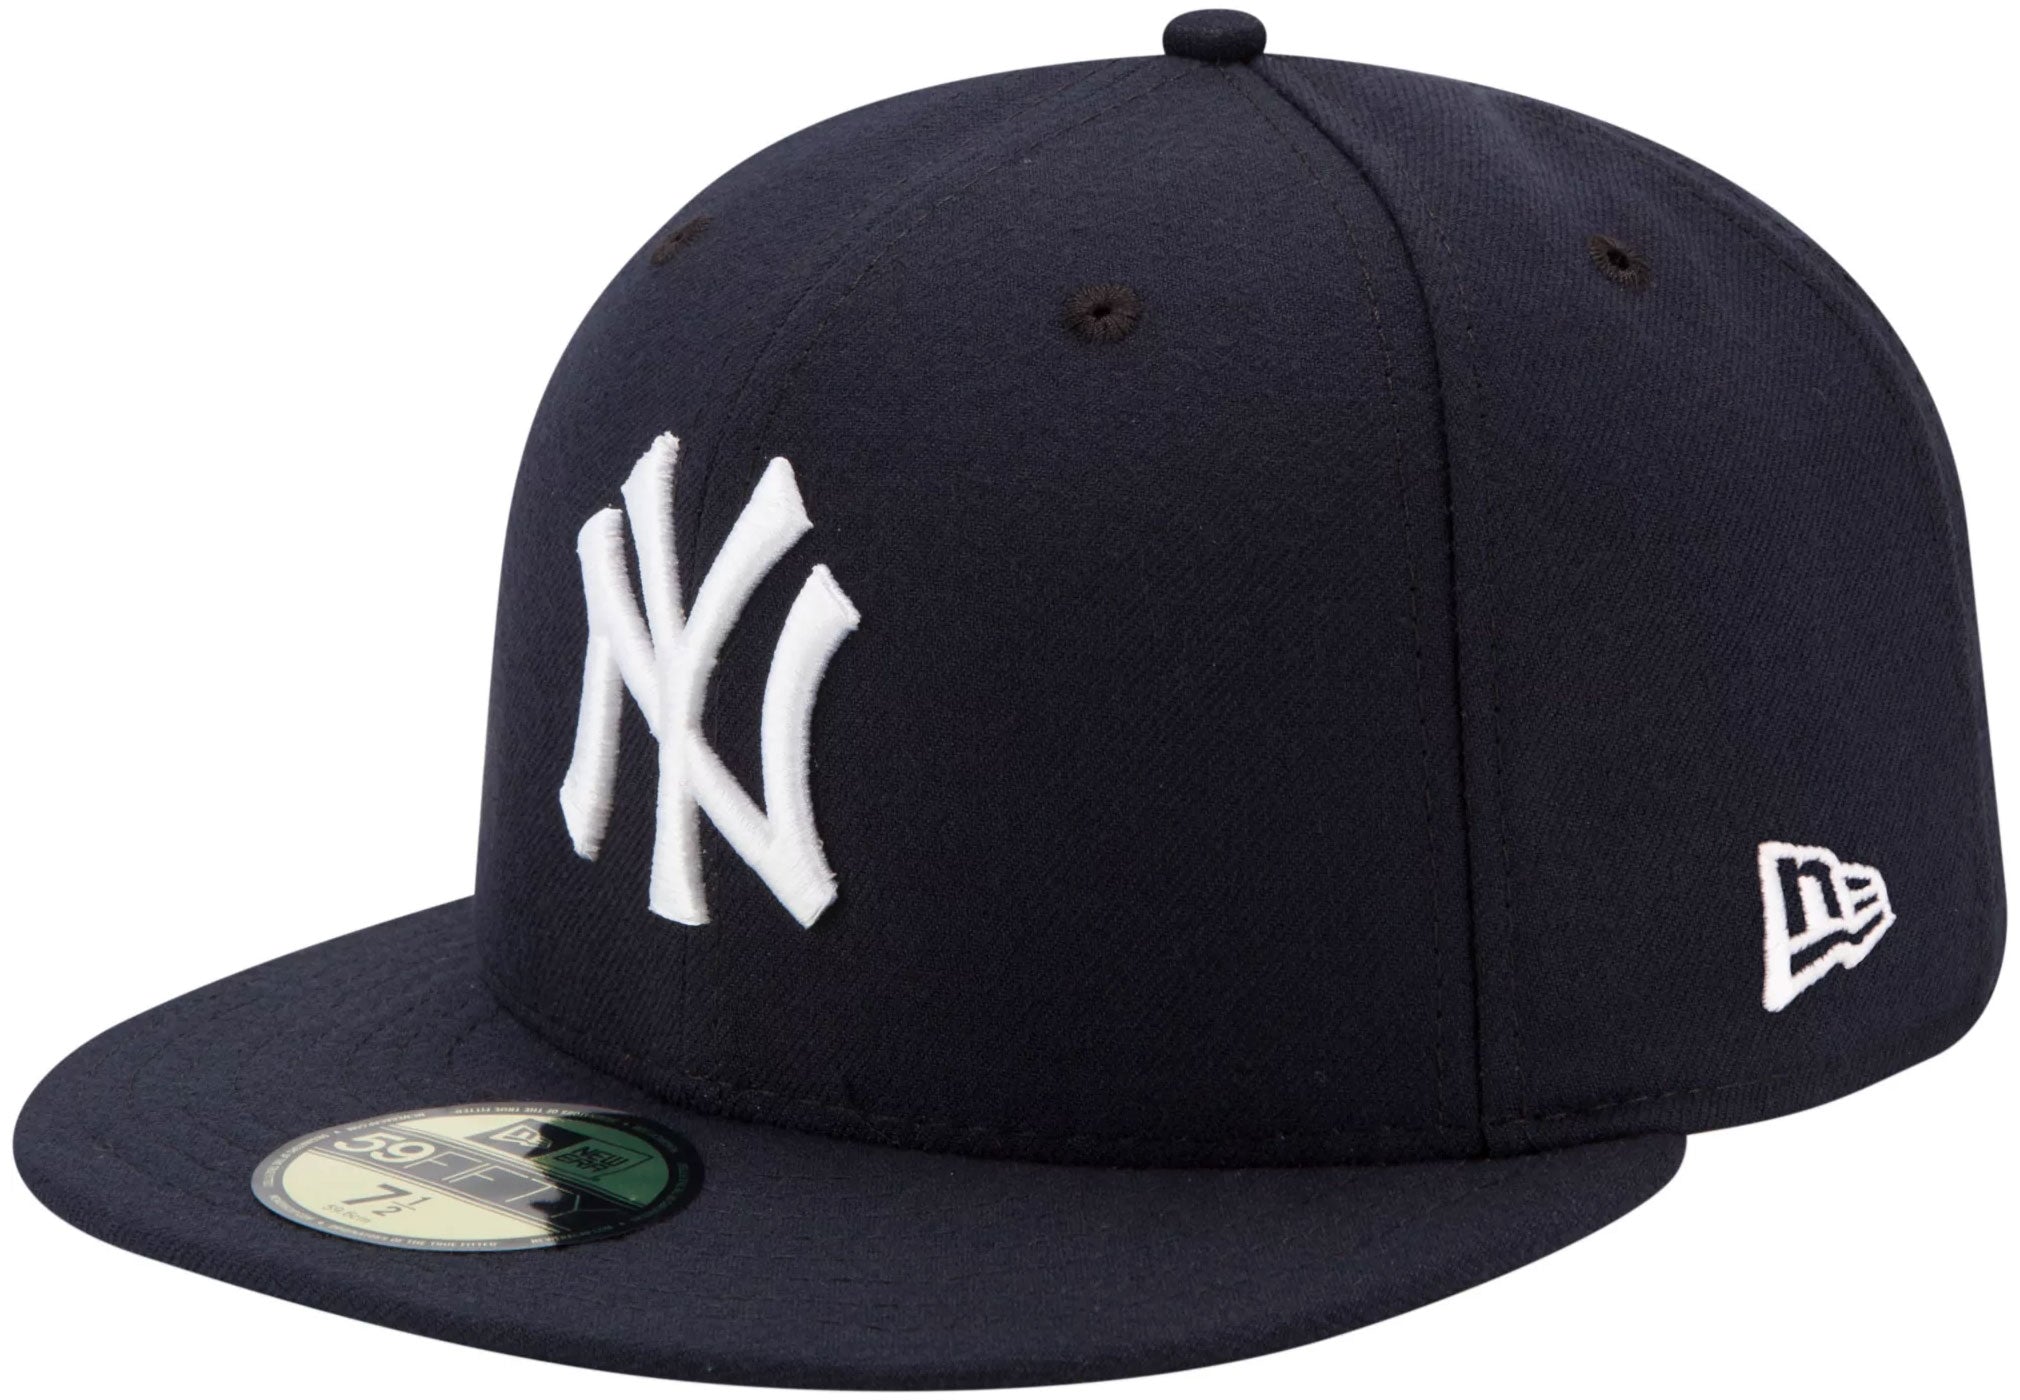 New Era 59FIFTY New York Yankees MLB Cap Size 7 3/8 70331909 